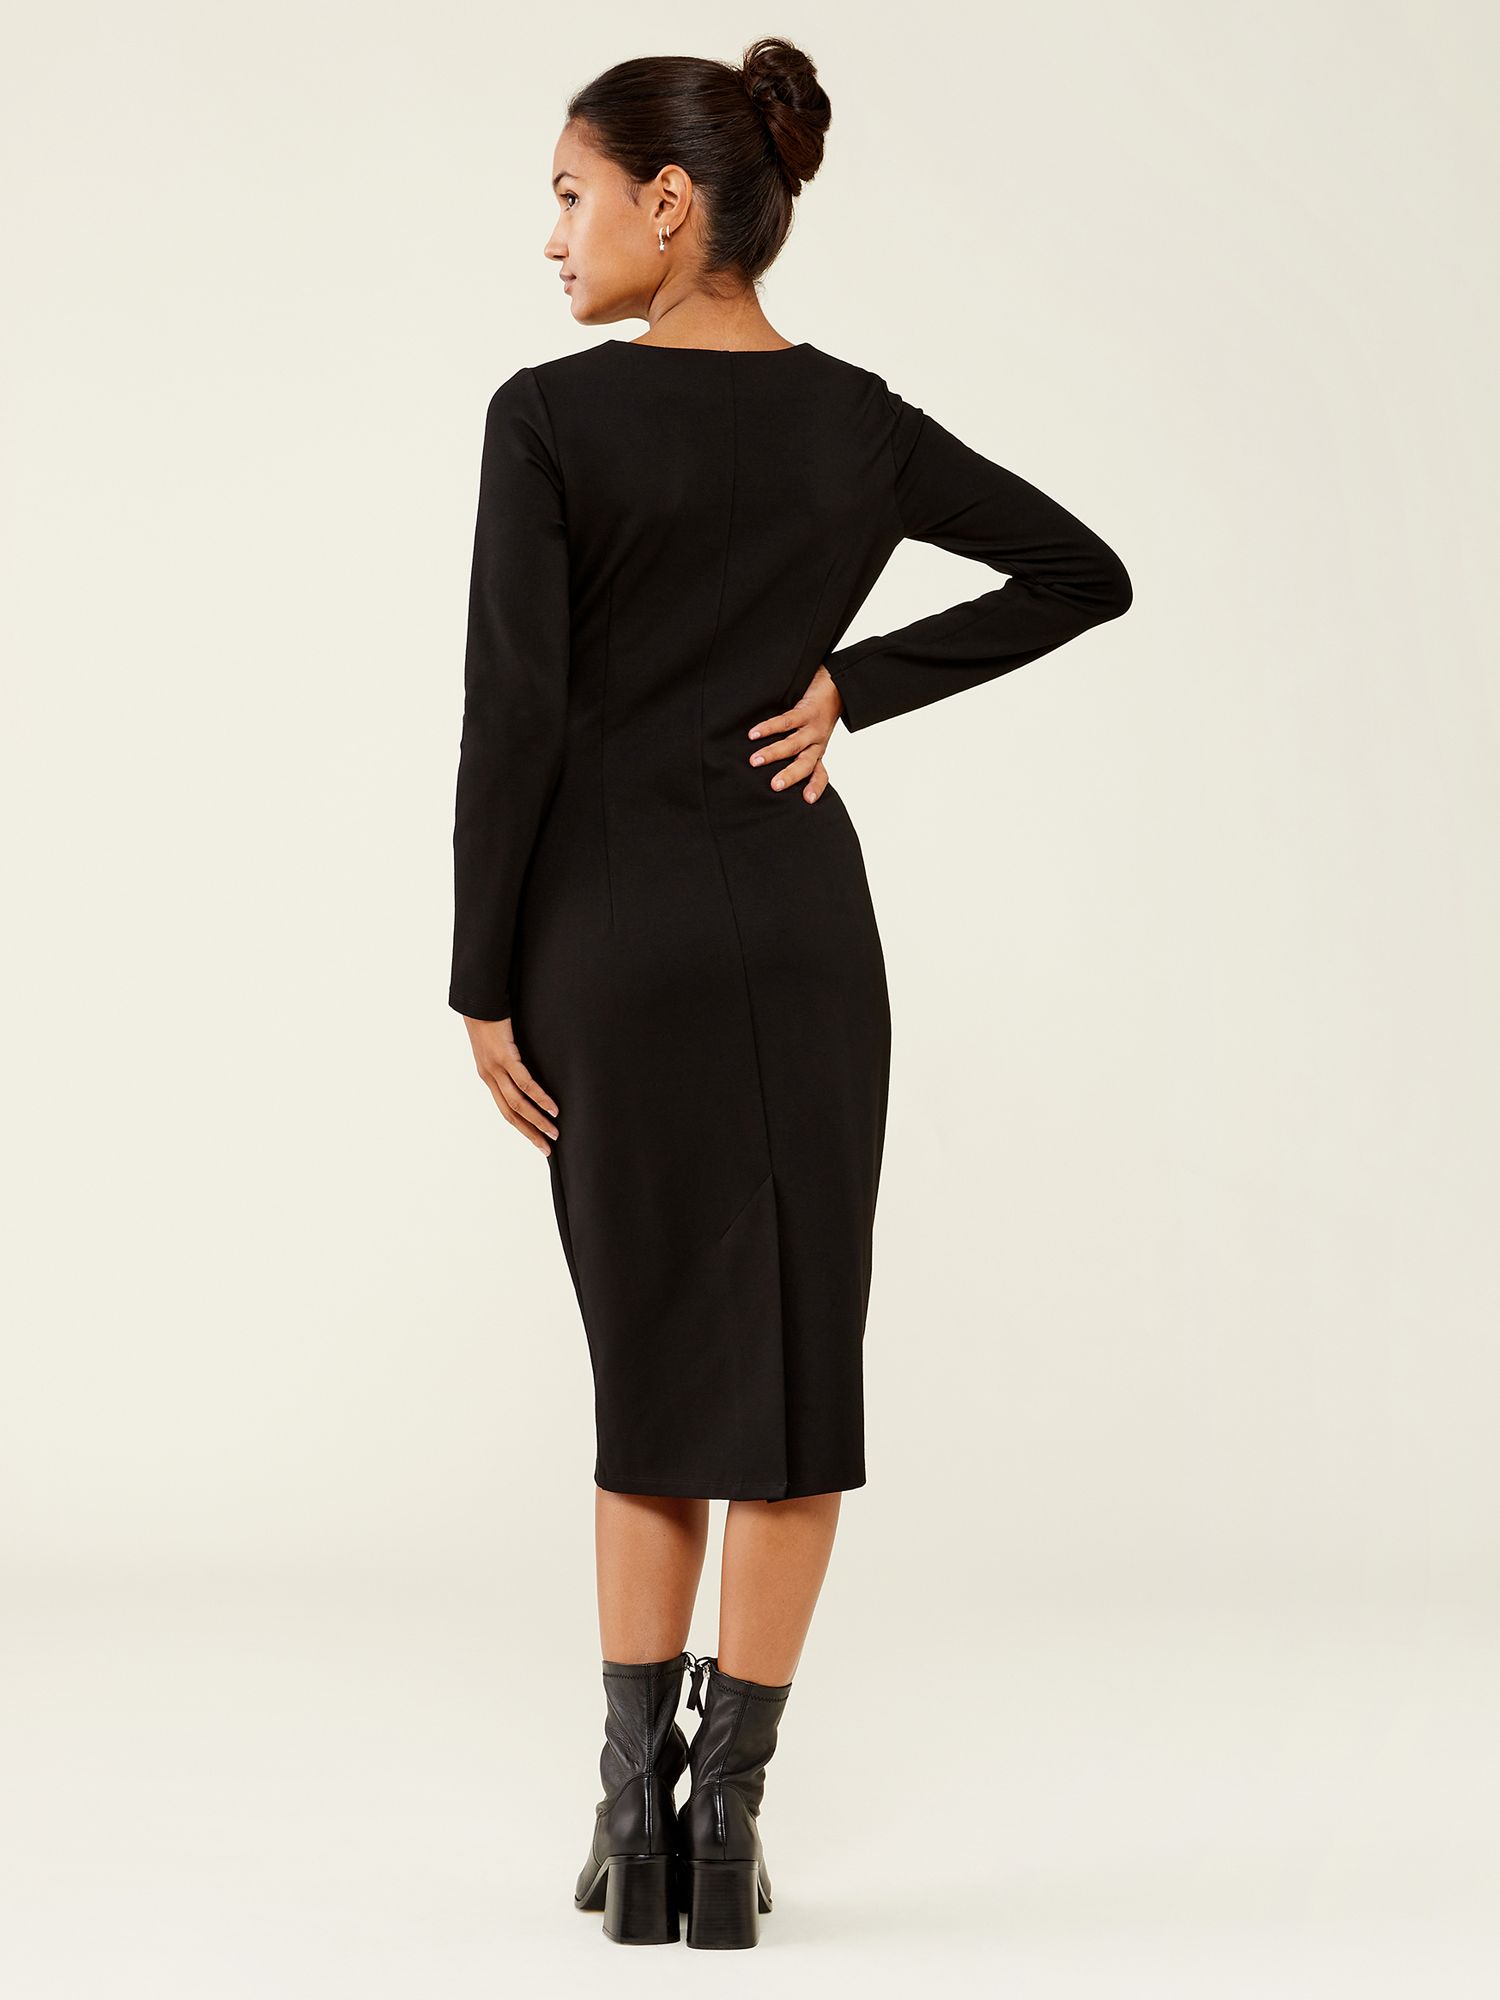 Finery Glain Midi Dress, Black, 10